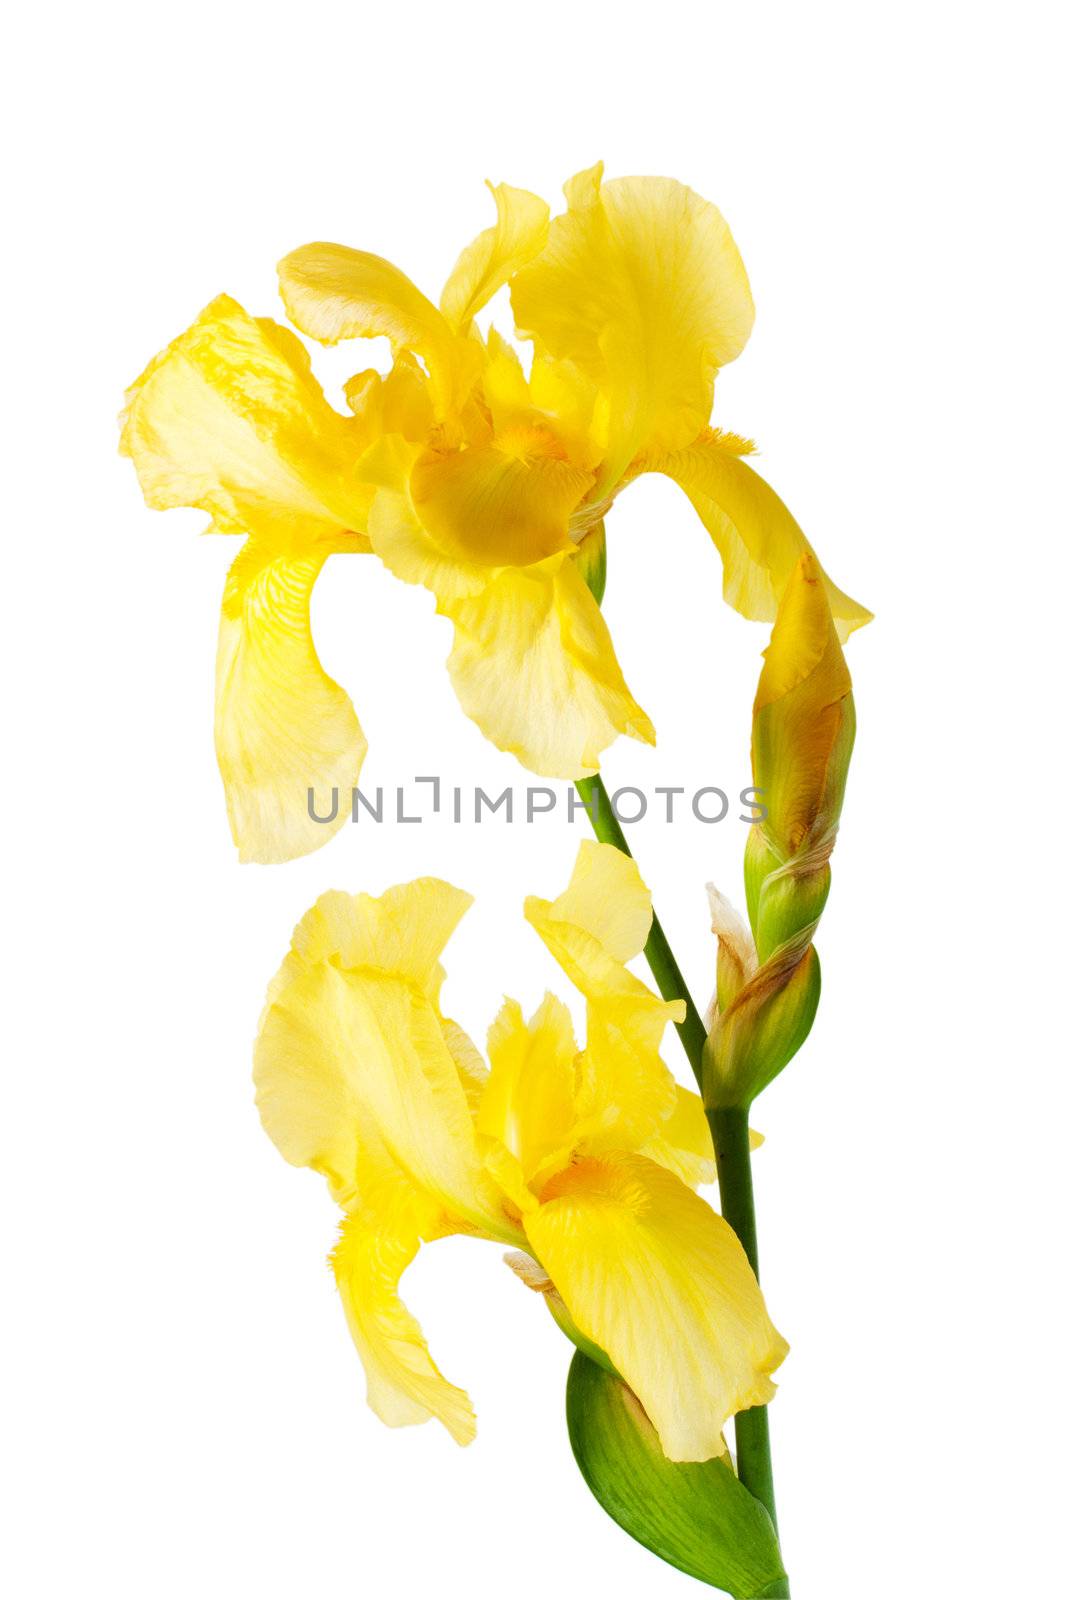 Nature yellow iris flower isolated on white background